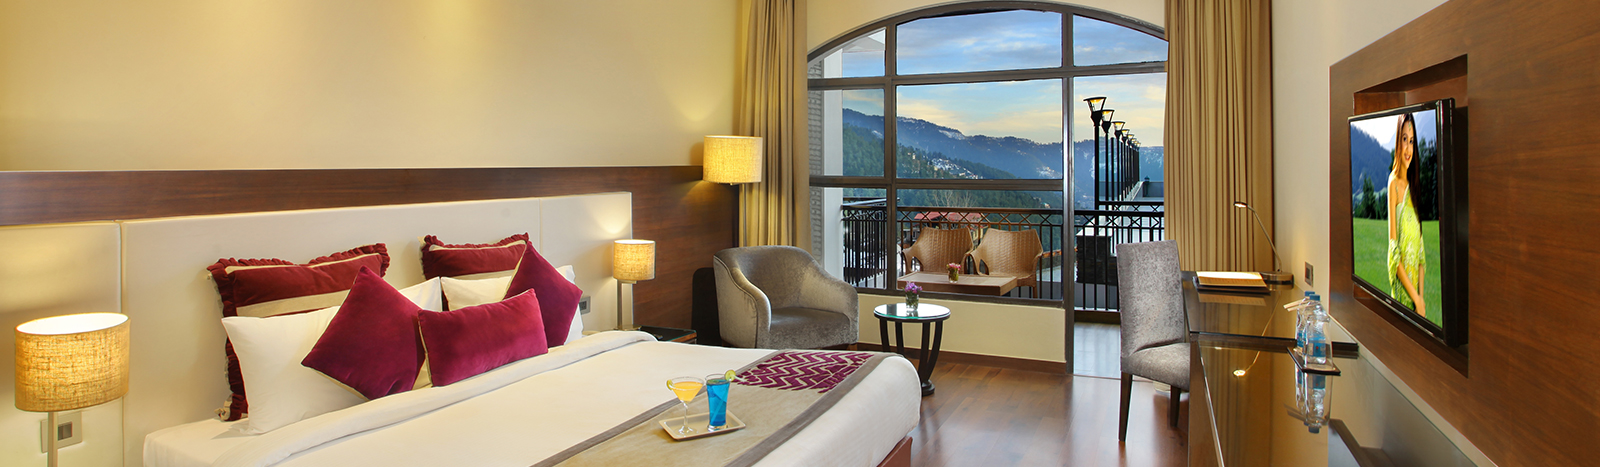 Accommodation - hotels near shimla bus stand